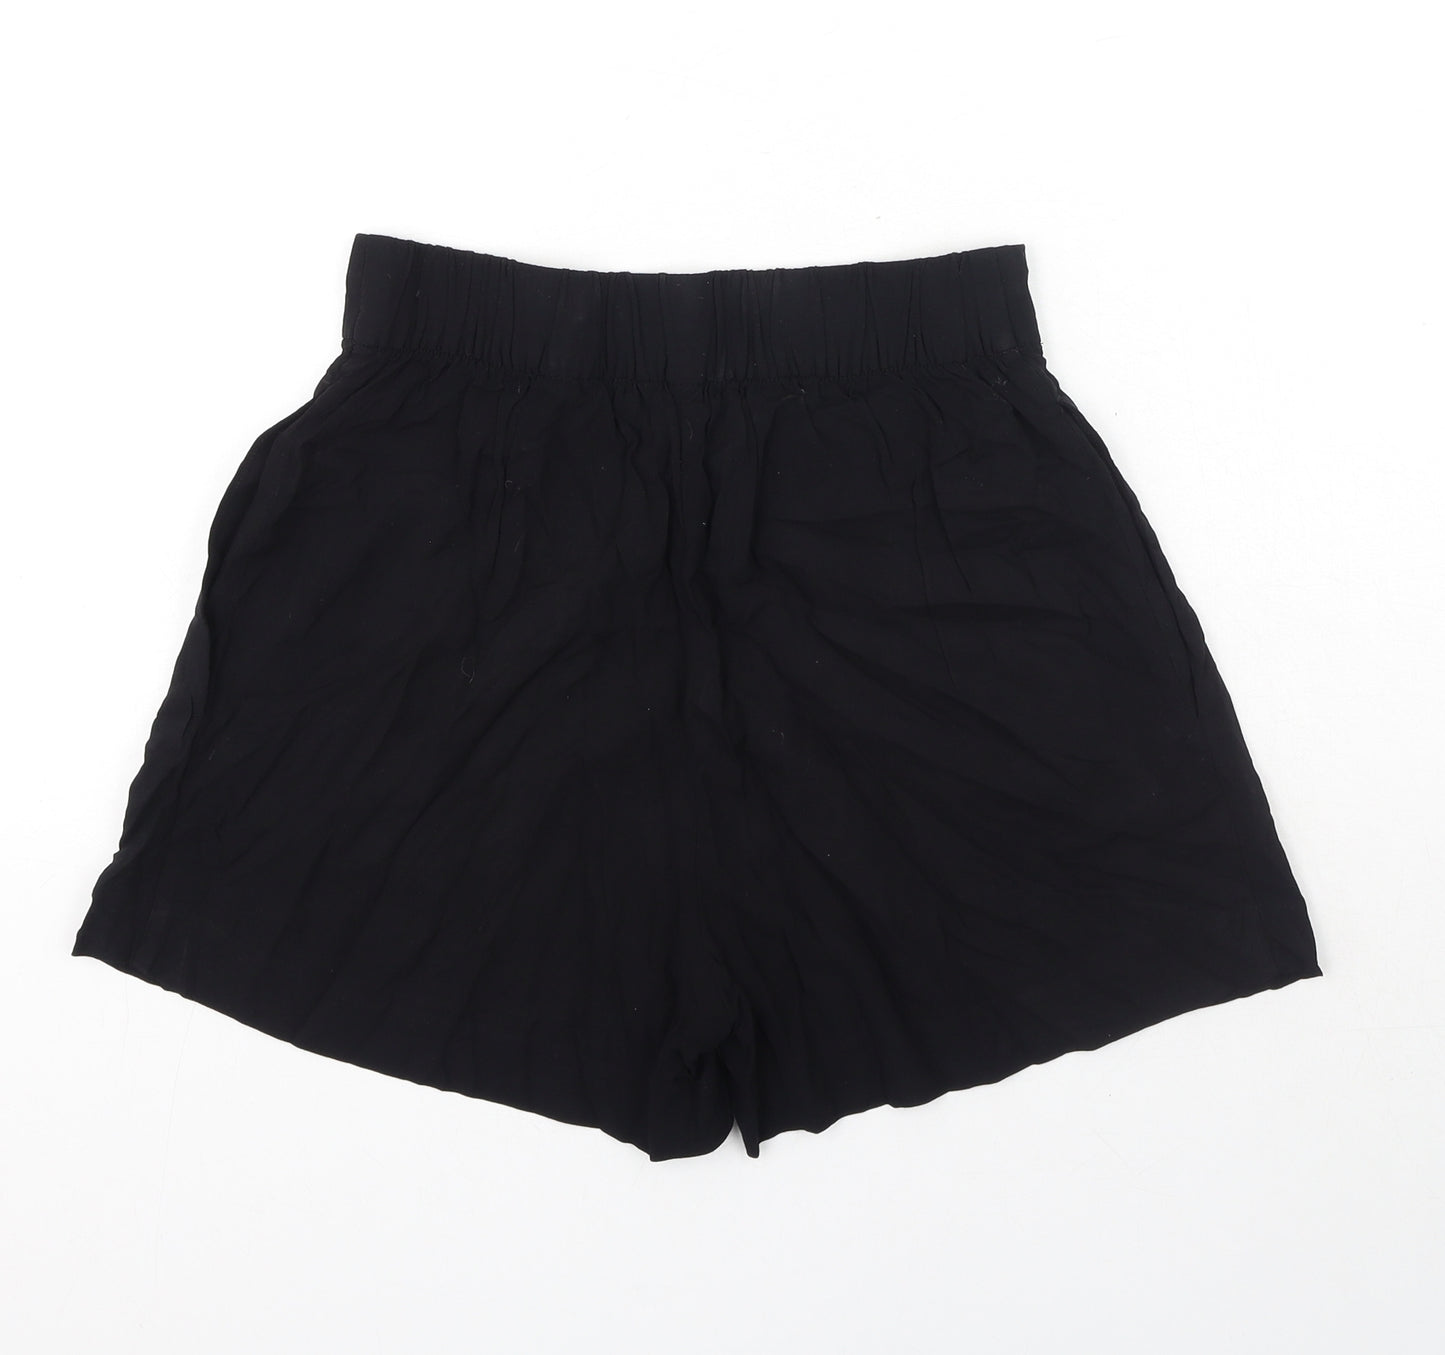 H&M Womens Black Viscose Basic Shorts Size 8 Regular Pull On